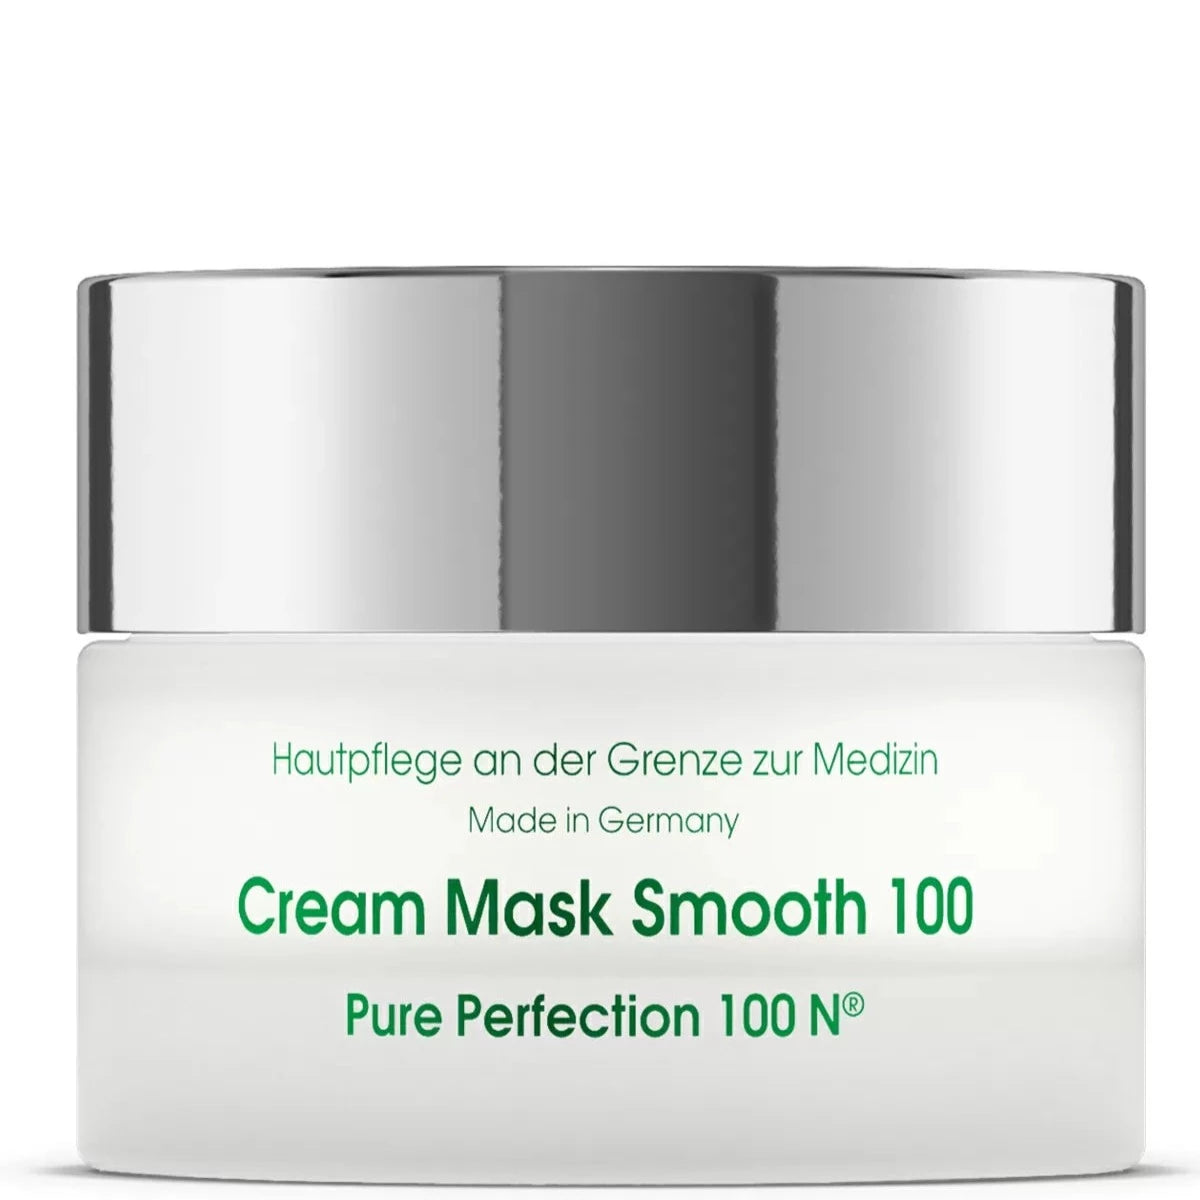 Cream Mask Smooth 100